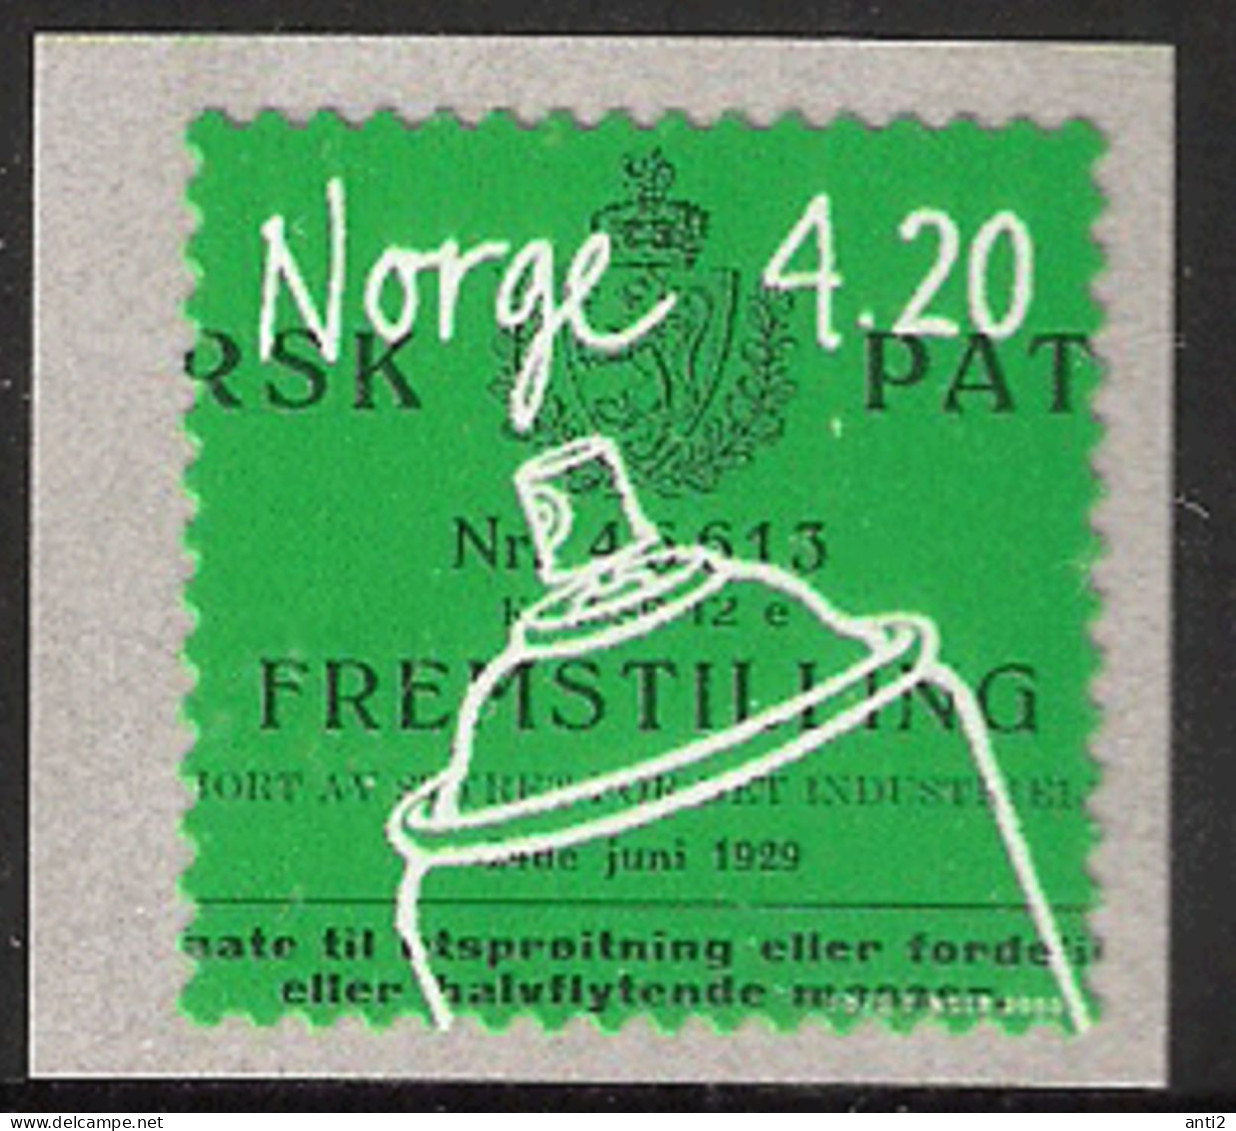 Norway Norge 2000 Norwegian Inventiveness. Aerosol Container. Spray Can Mi 1354  MNH(**) - Nuovi